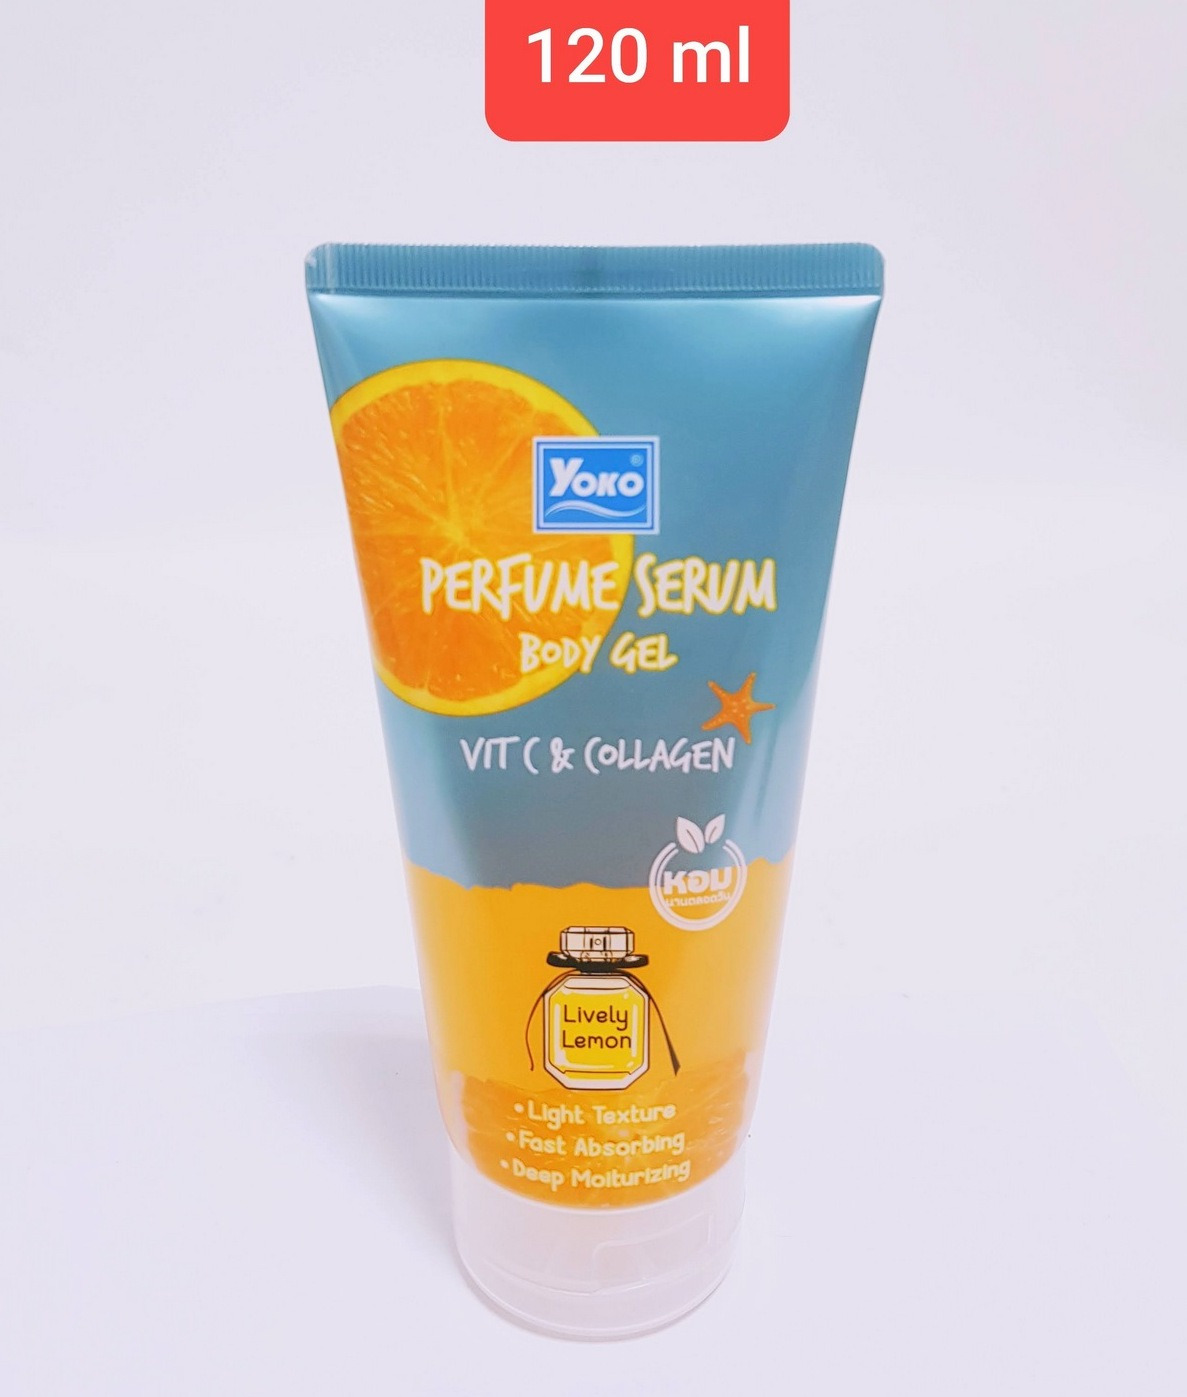 Yoko Perfume Servm Body Gel Vitc Collagen 120 ML